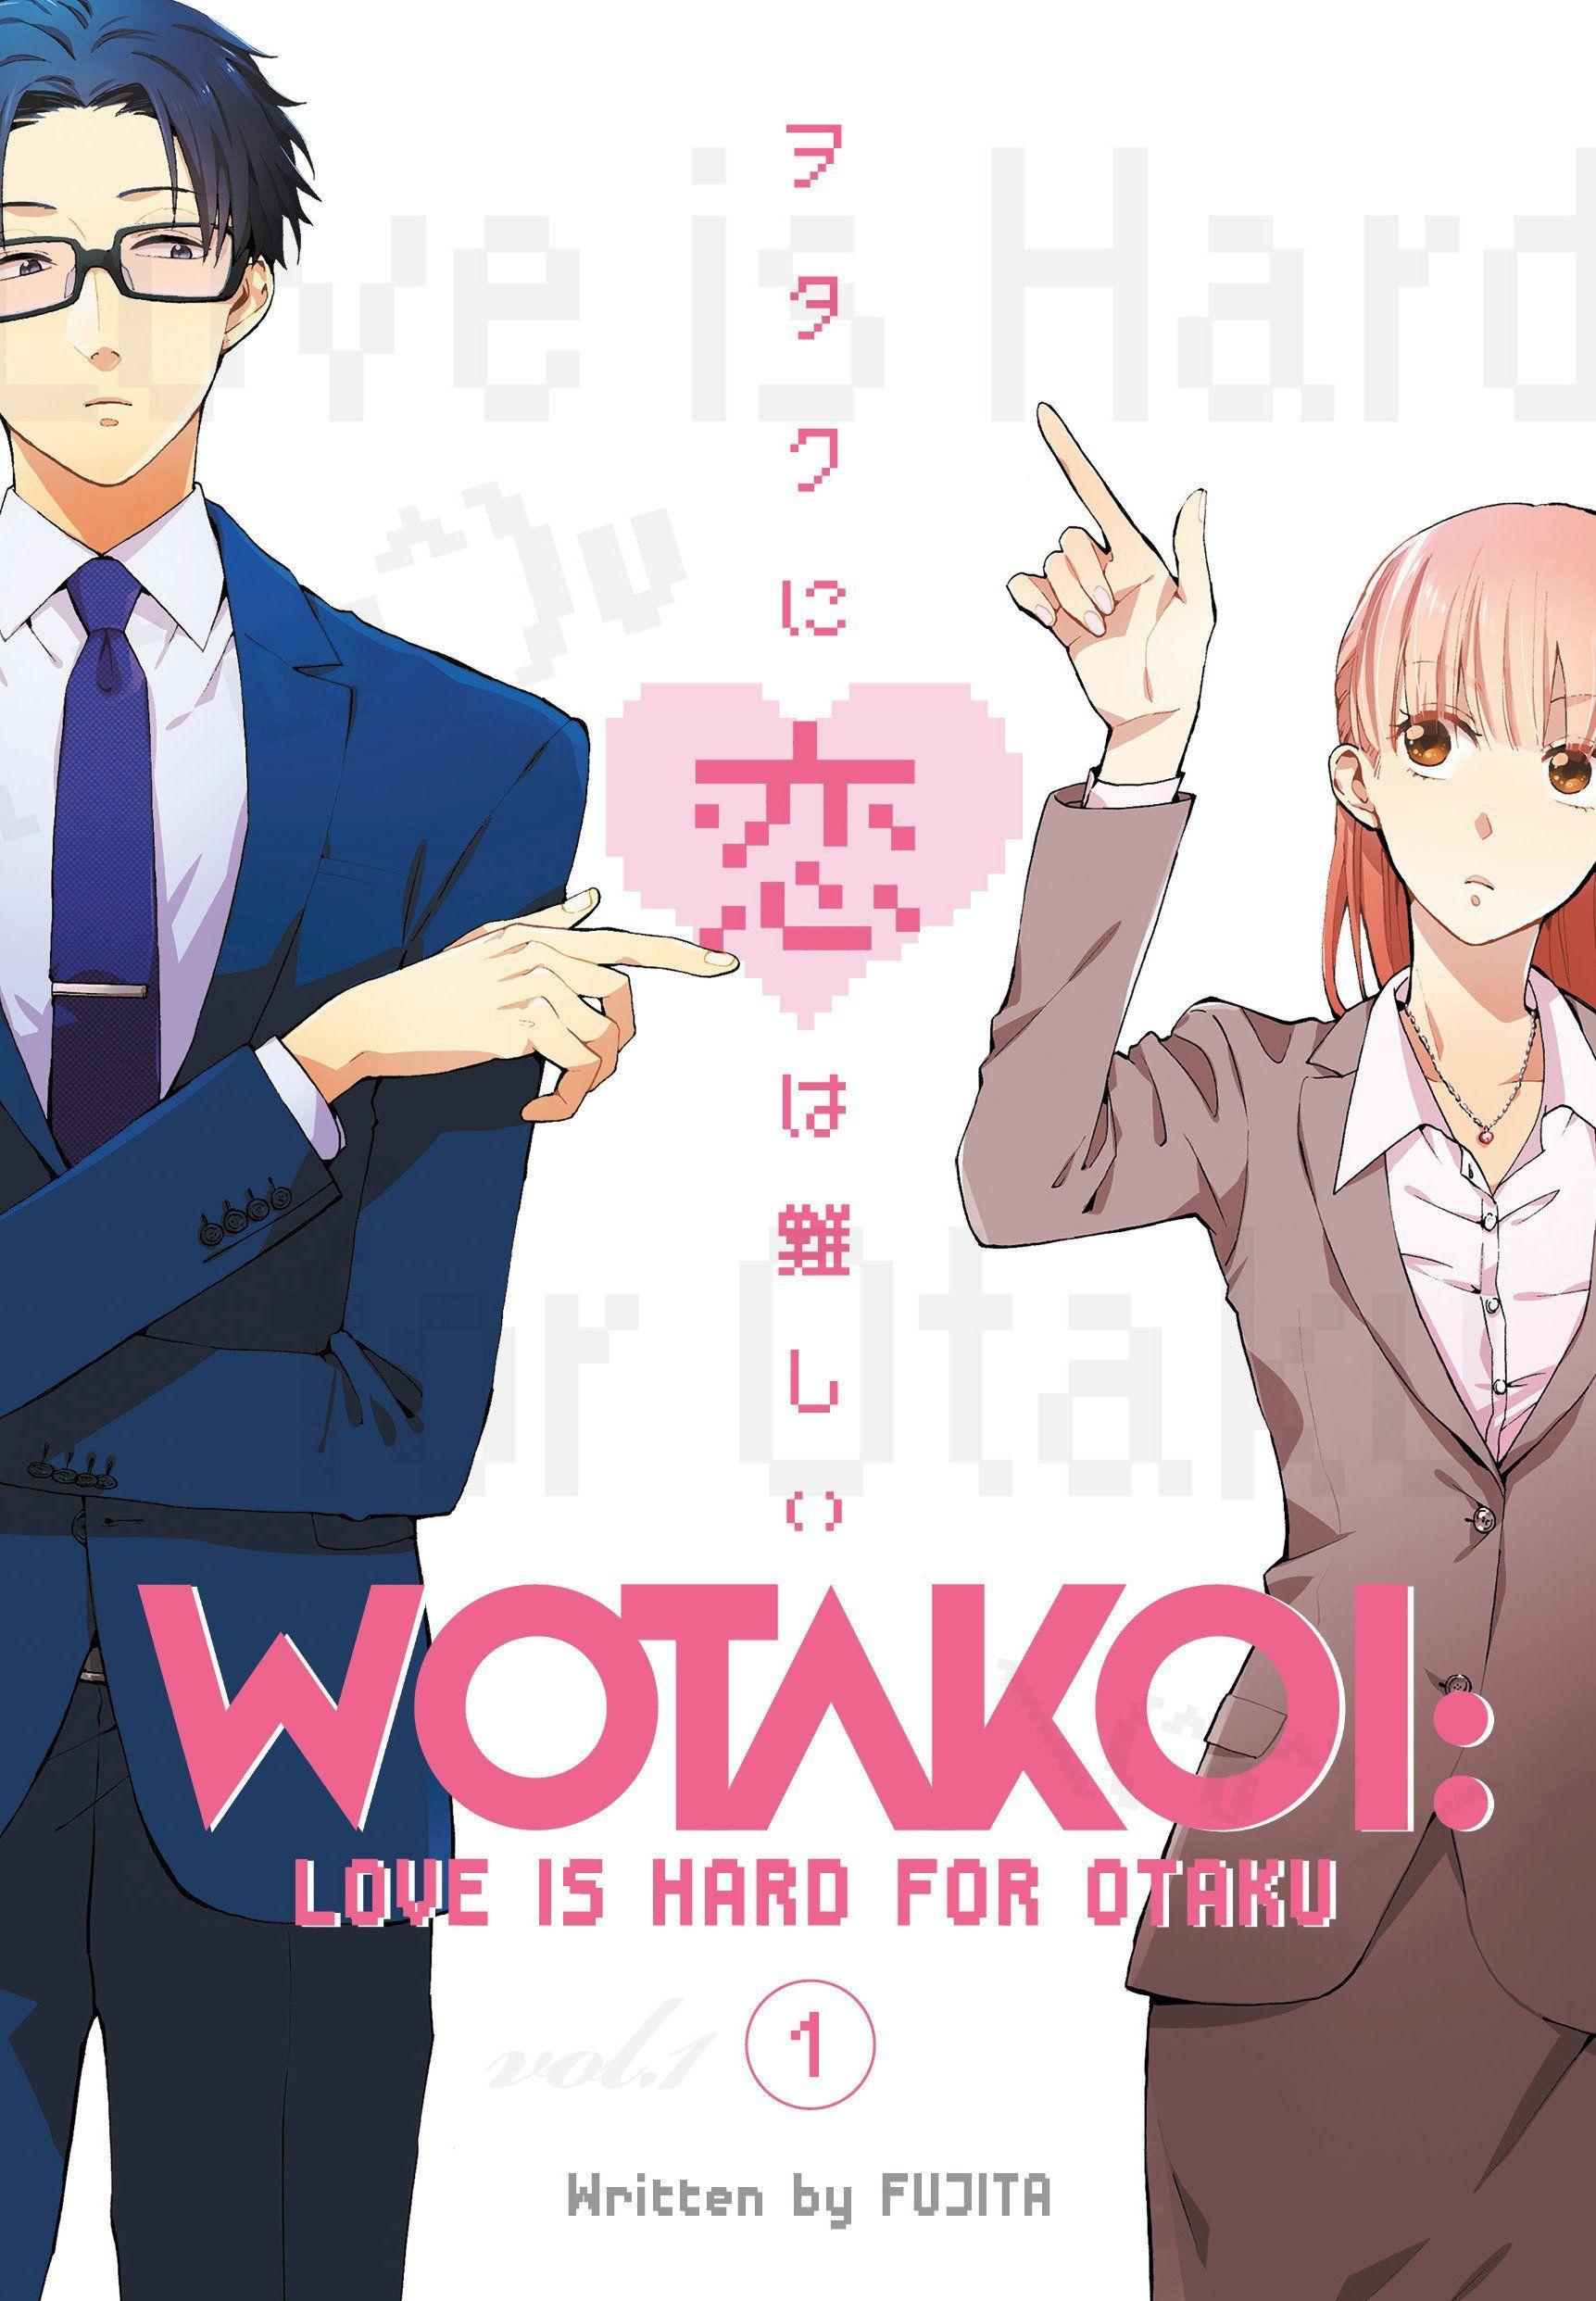 Wotakoi Love Is Hard For Otaku Wallpapers Top Free Wotakoi Love Is